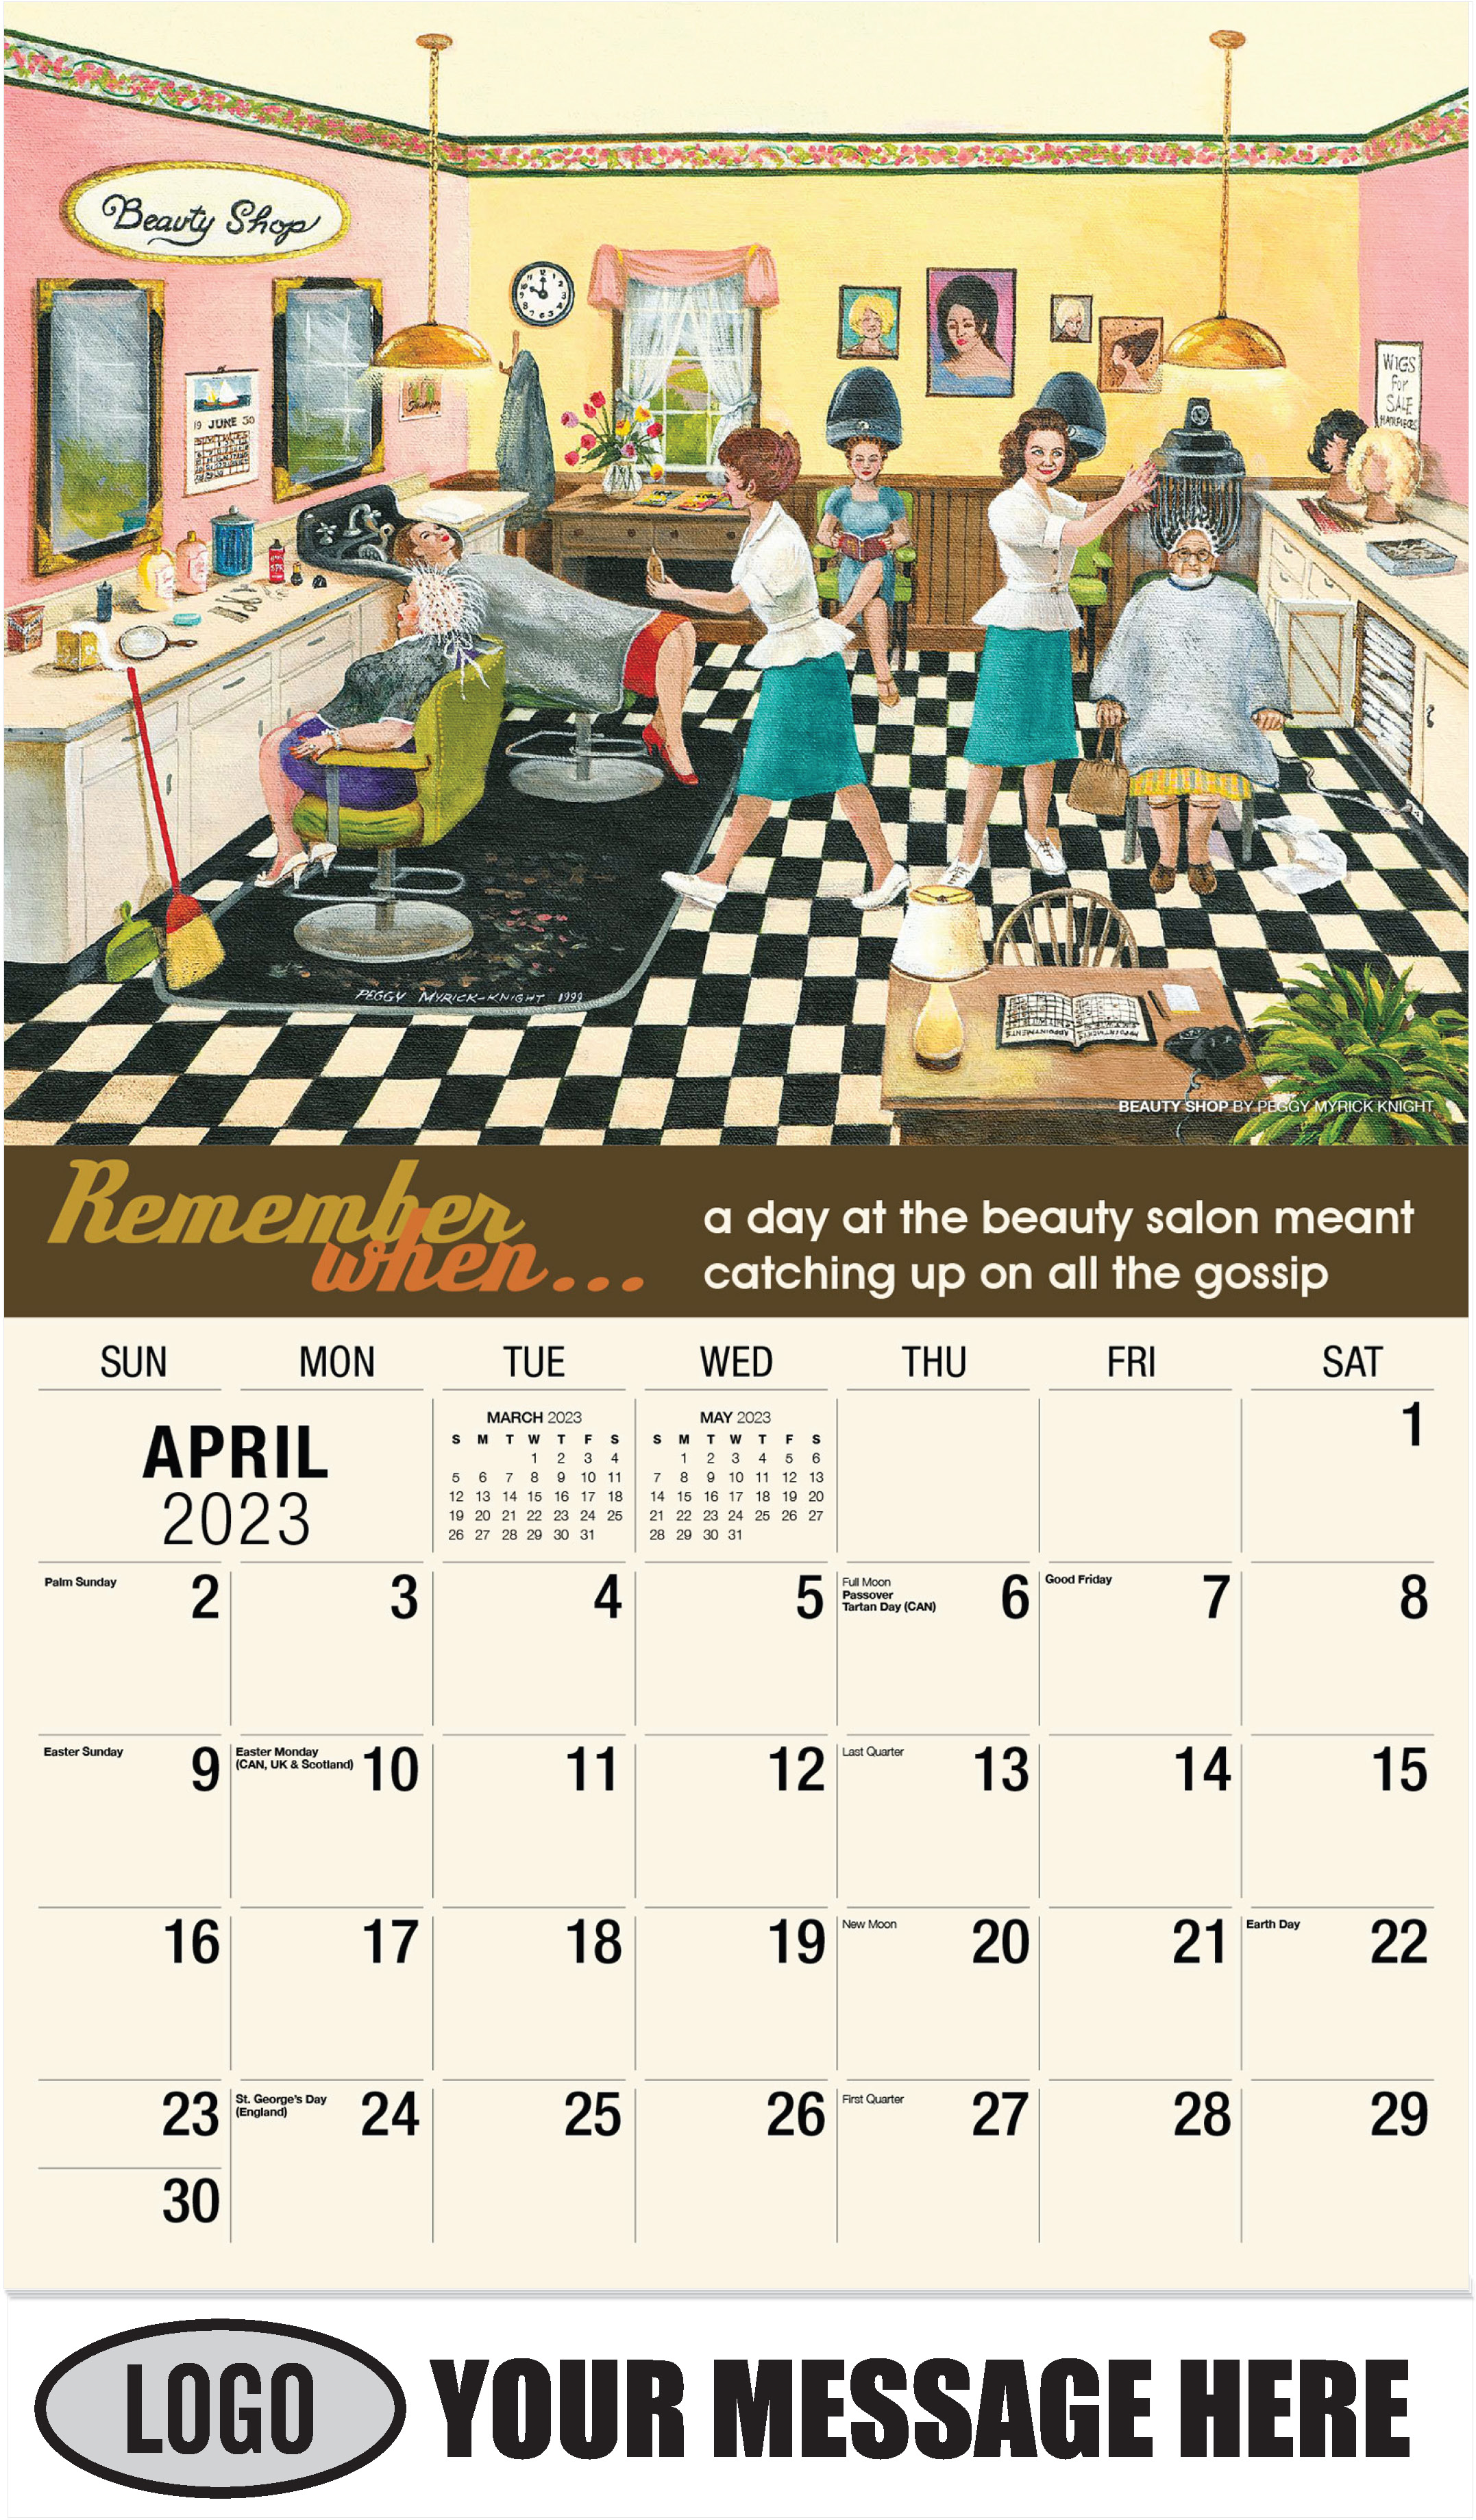 Beauty Shop by Peggy Myrick Knight - April - Remember When 2023 Promotional Calendar